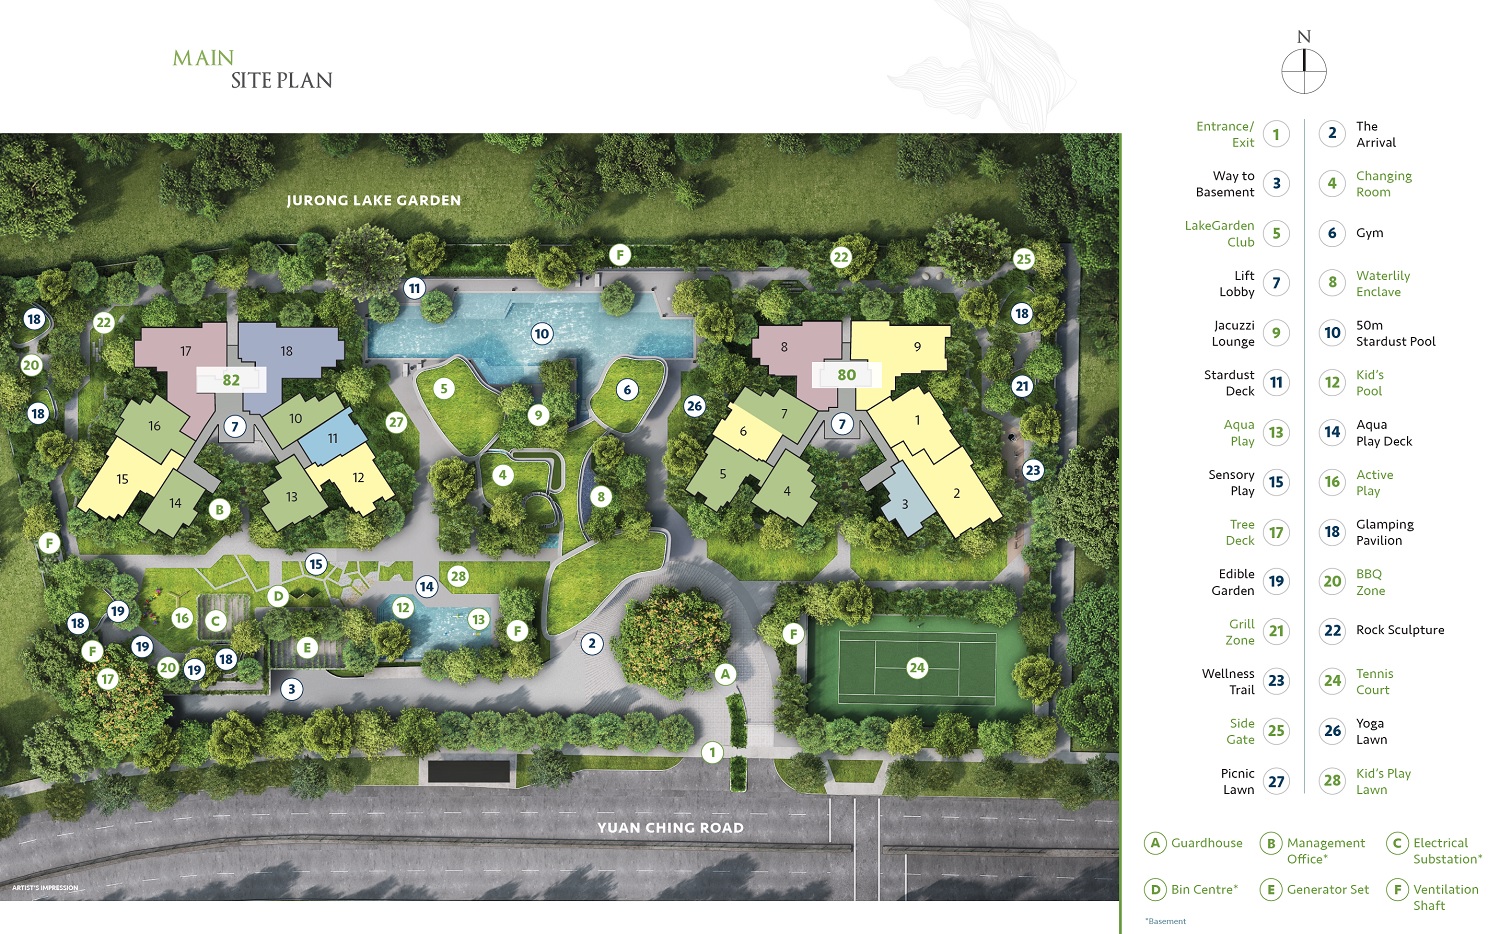 the lakegarden residences site plan